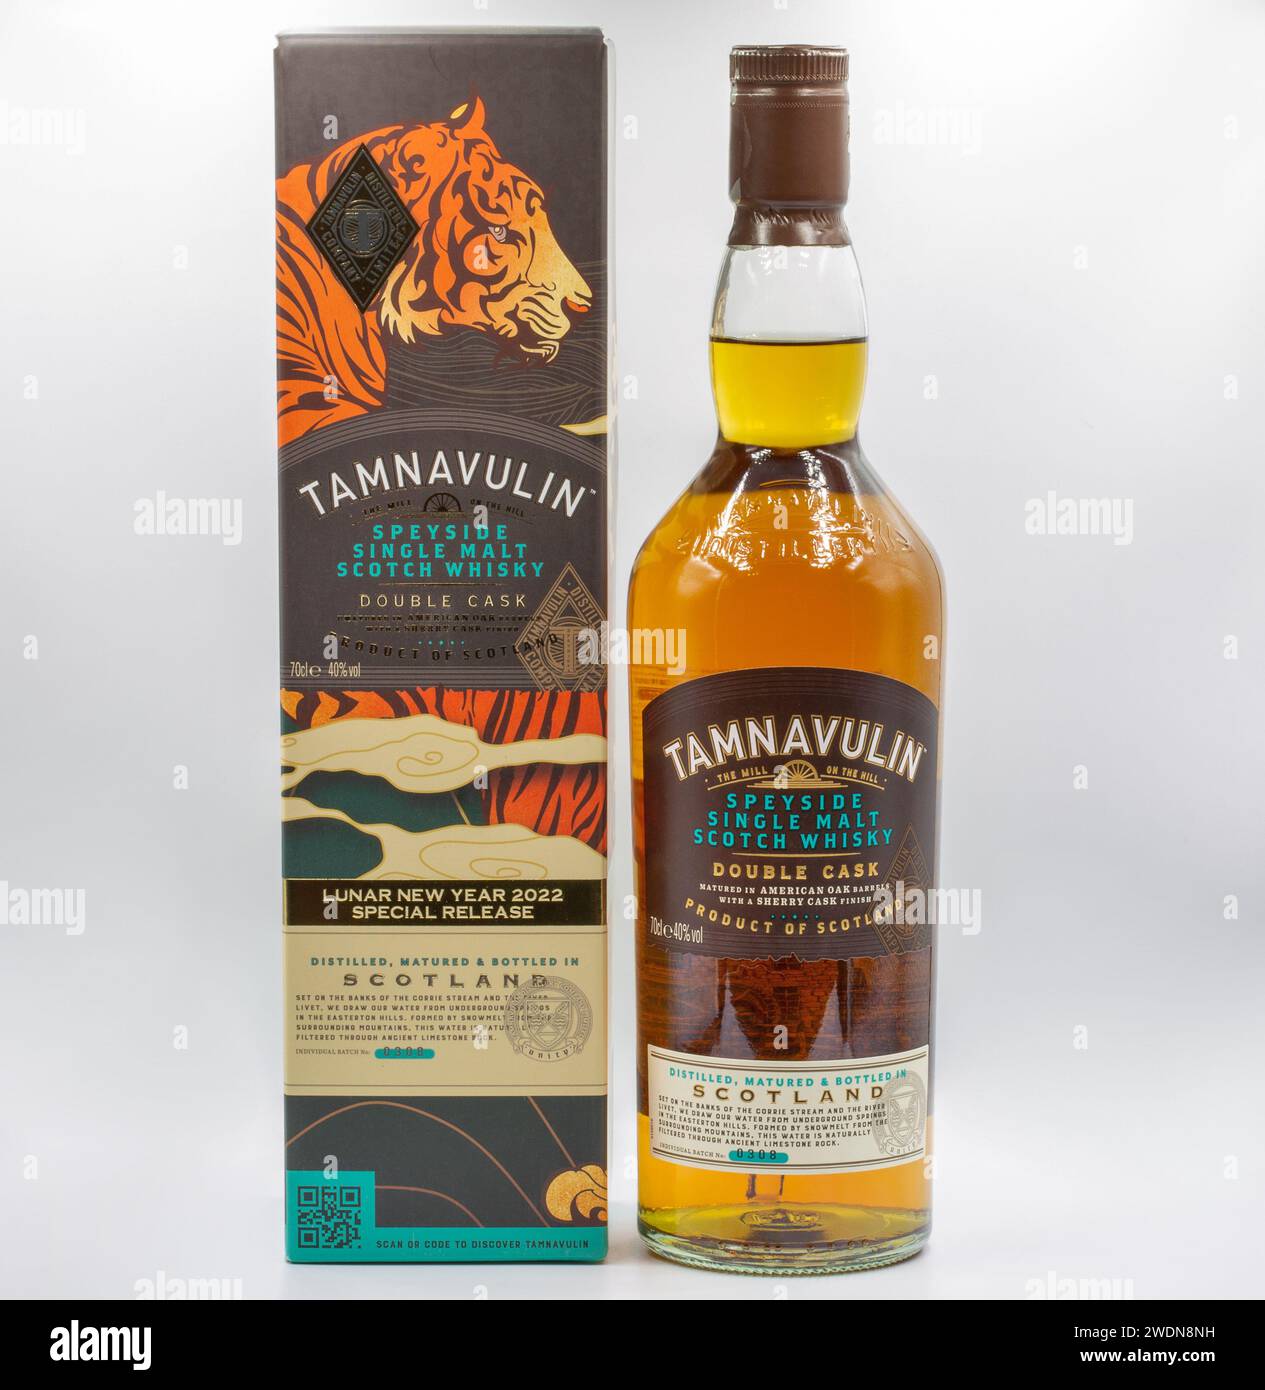 Kiew, Ukraine - 6. September 2022: Studio-Shooting von Tamnavulin Speyside Single Malt Scotch Double Cask Whisky Flasche und Box Closeup gegen weiß. Di Stockfoto